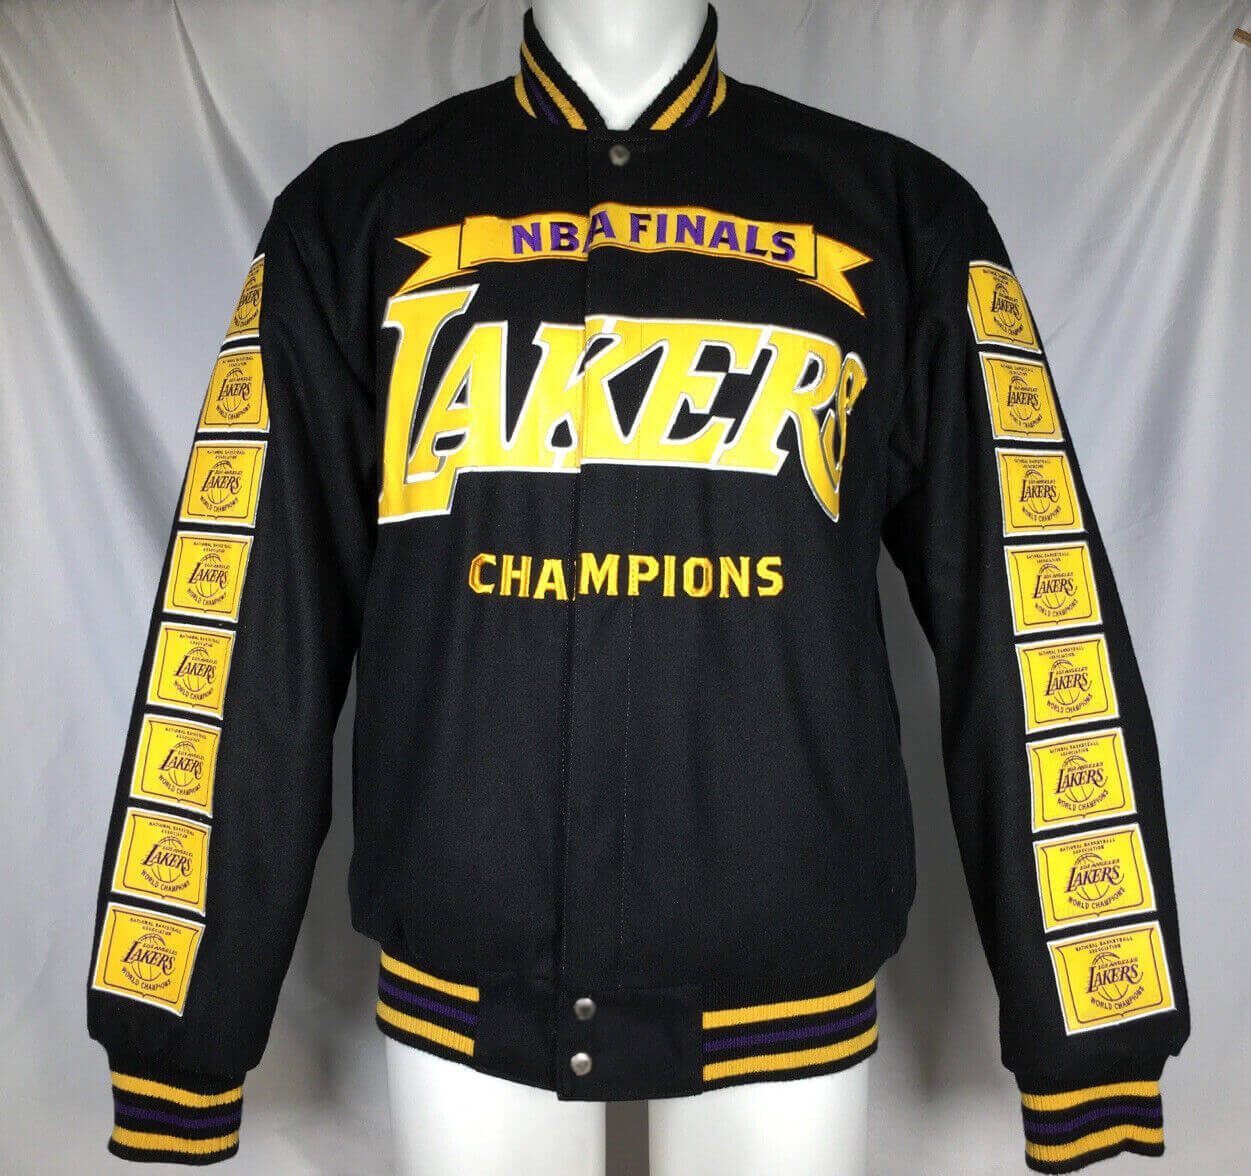 Shop Jeff Hamilton Lakers Championship Jacket